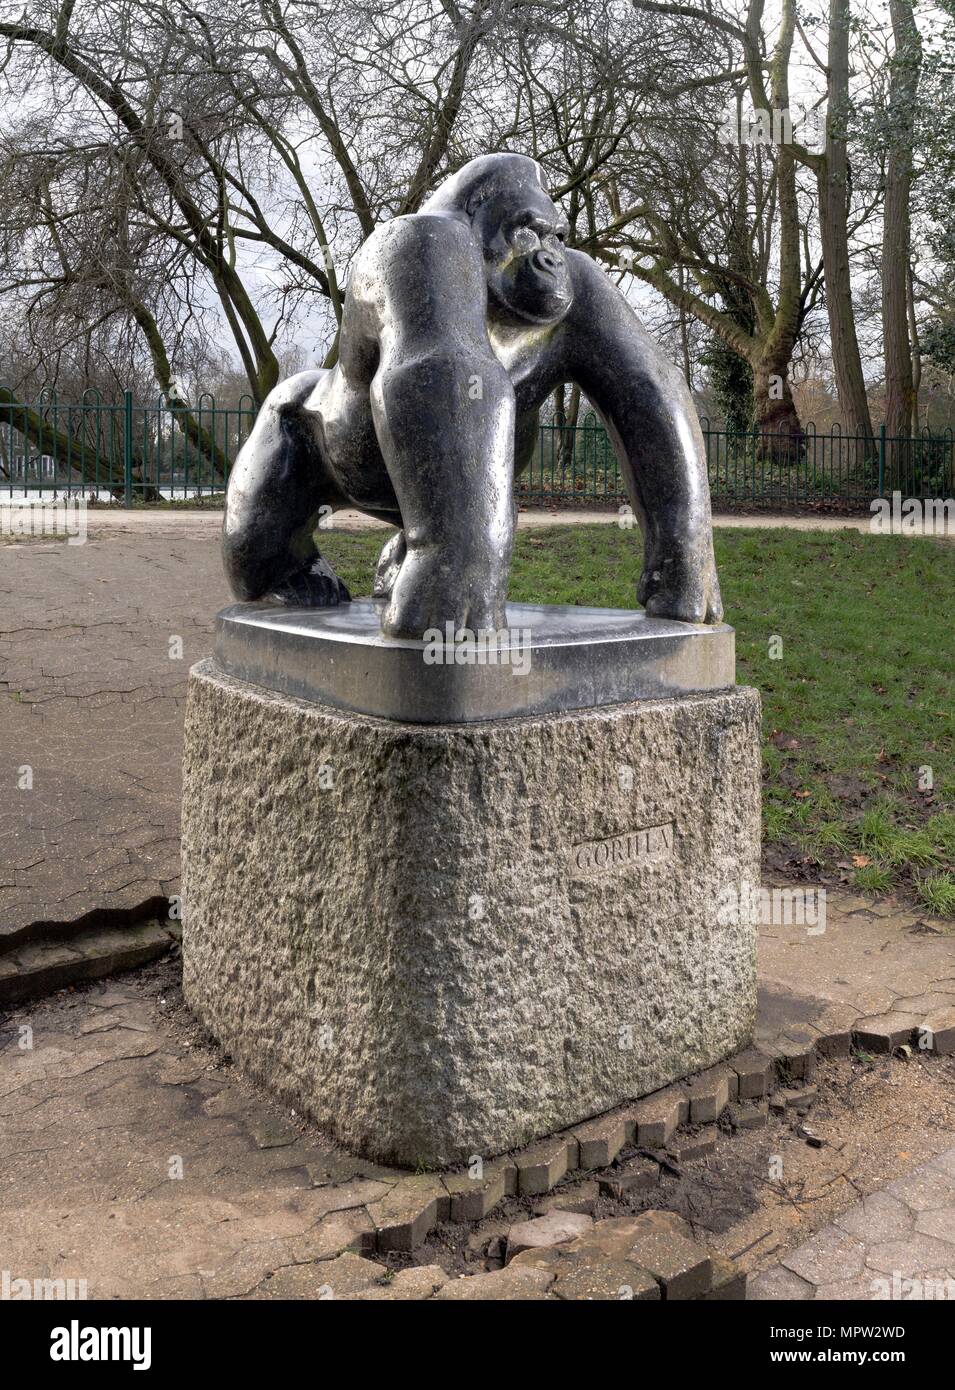 'Guy The Gorilla', sculpture by David Wynne, Crystal Palace Park, Sydenham, London, 2016. Artist: Chris Redgrave. Stock Photo